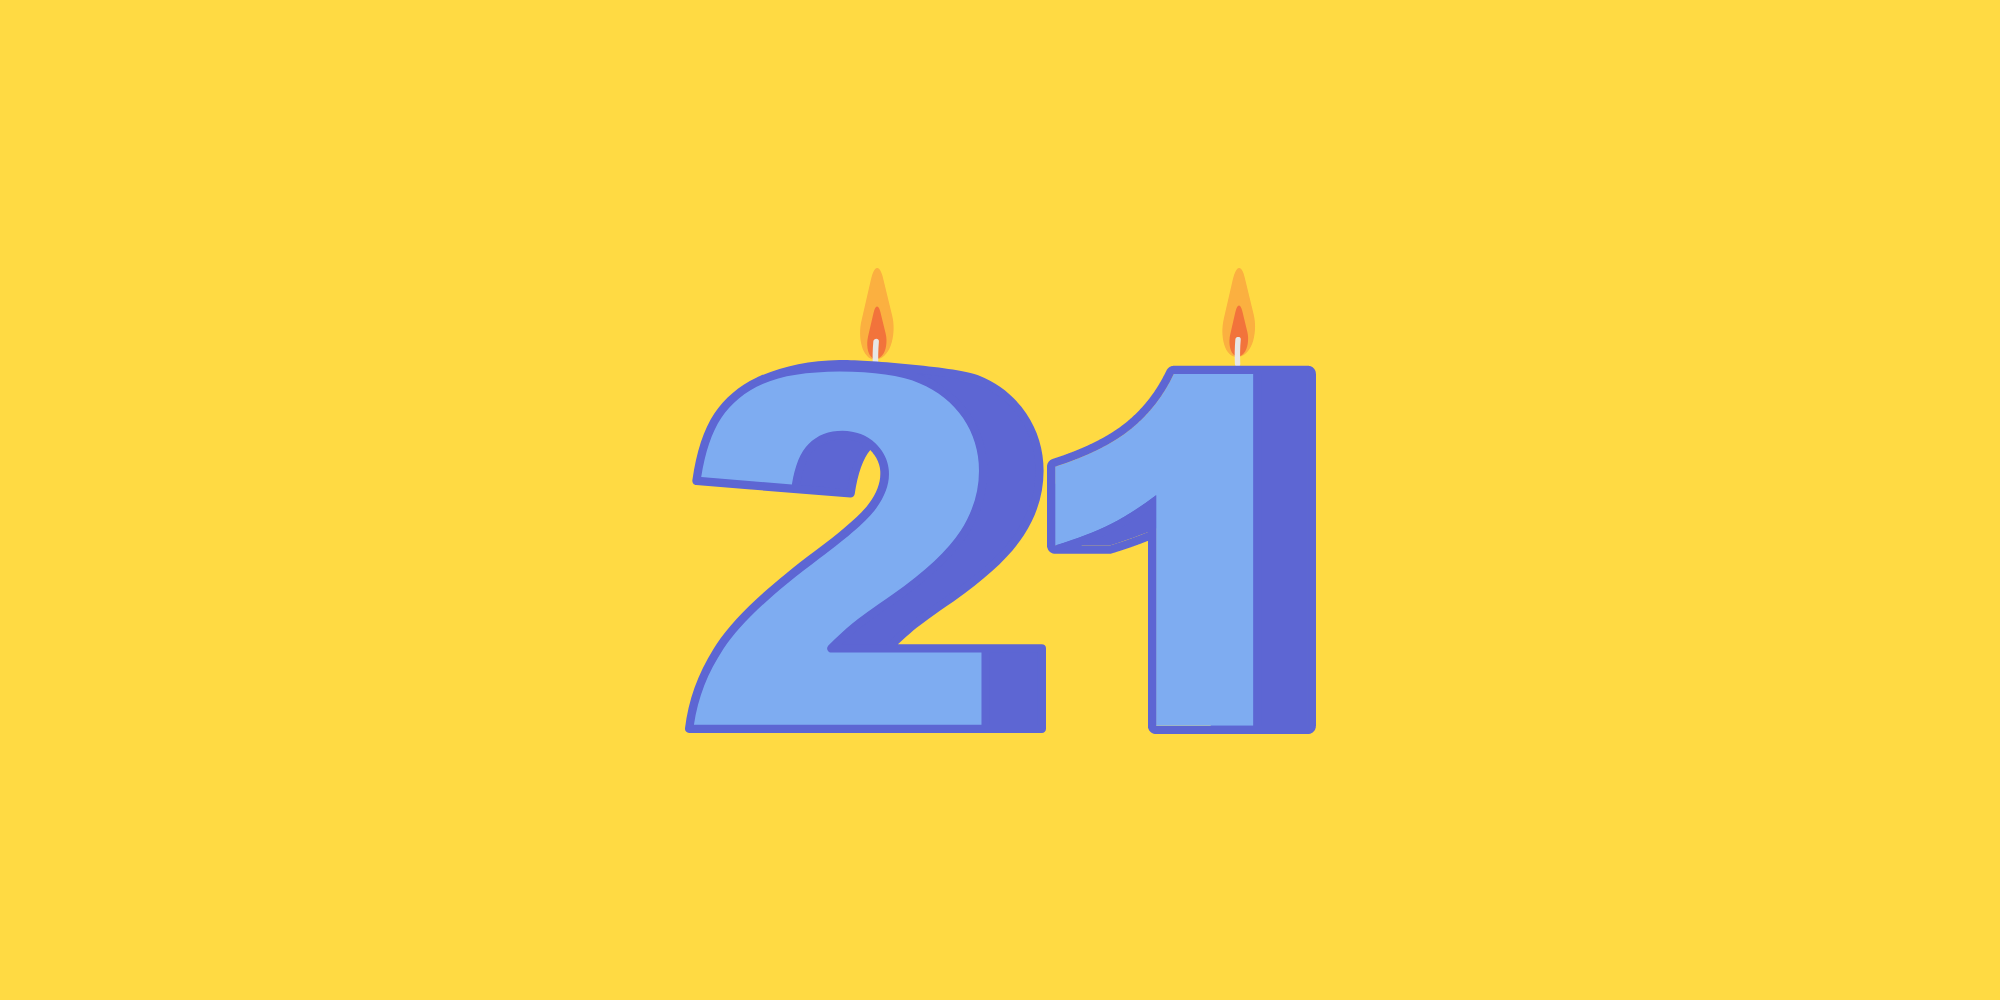 21st-birthday-gift-ideas